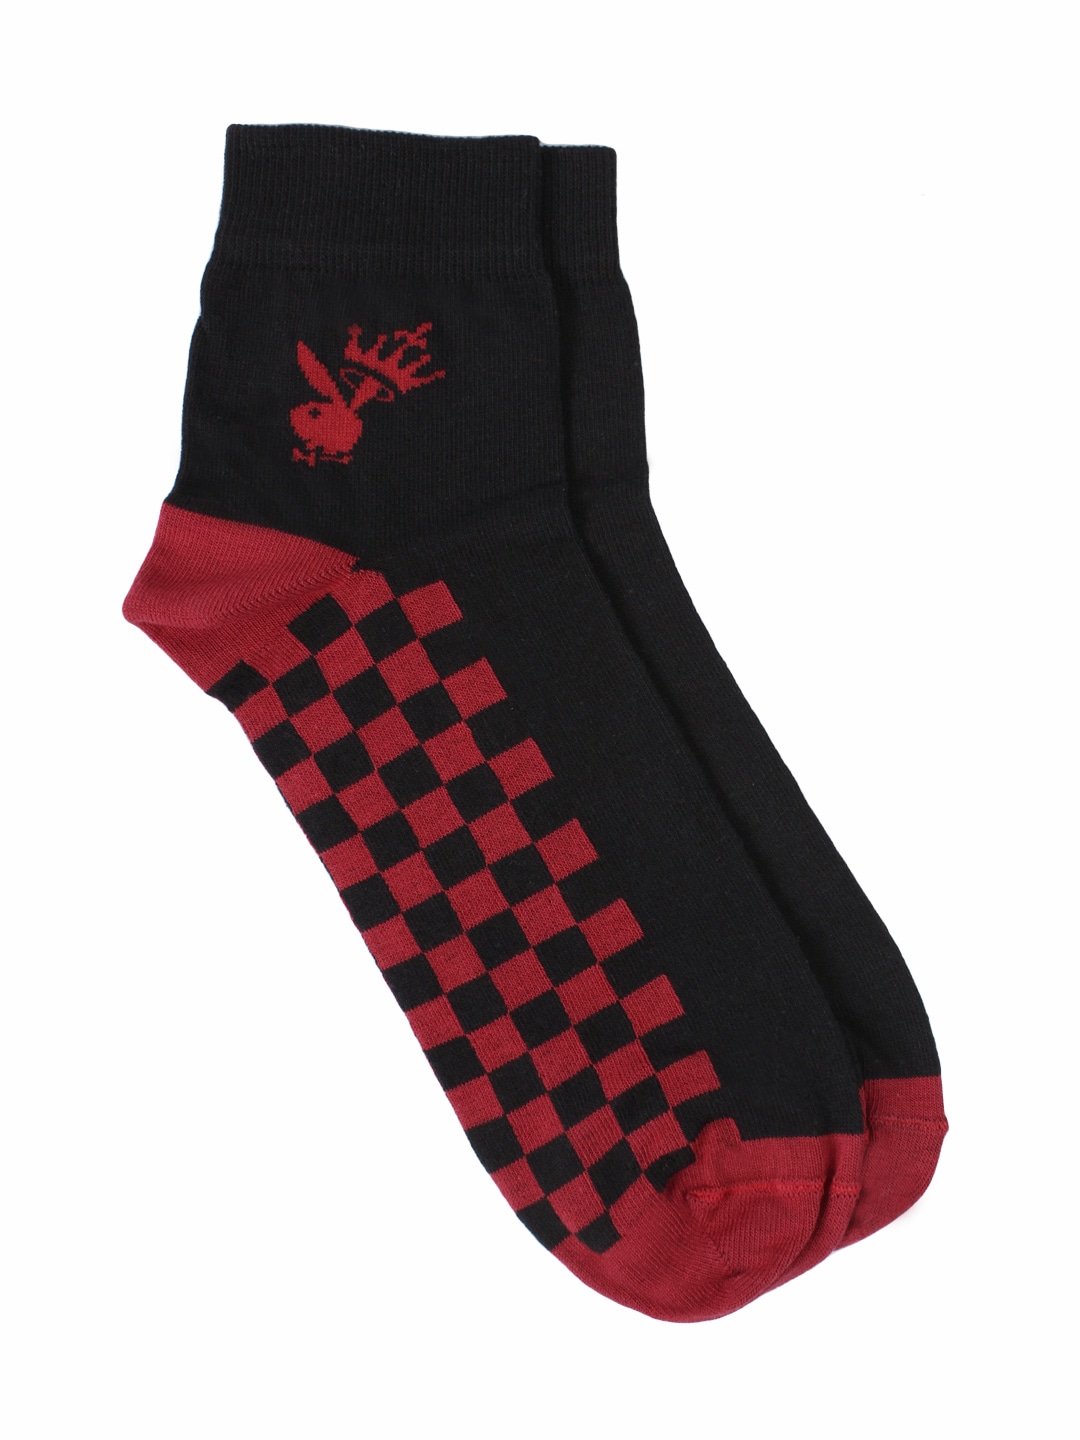 Playboy Men Black & Red Socks